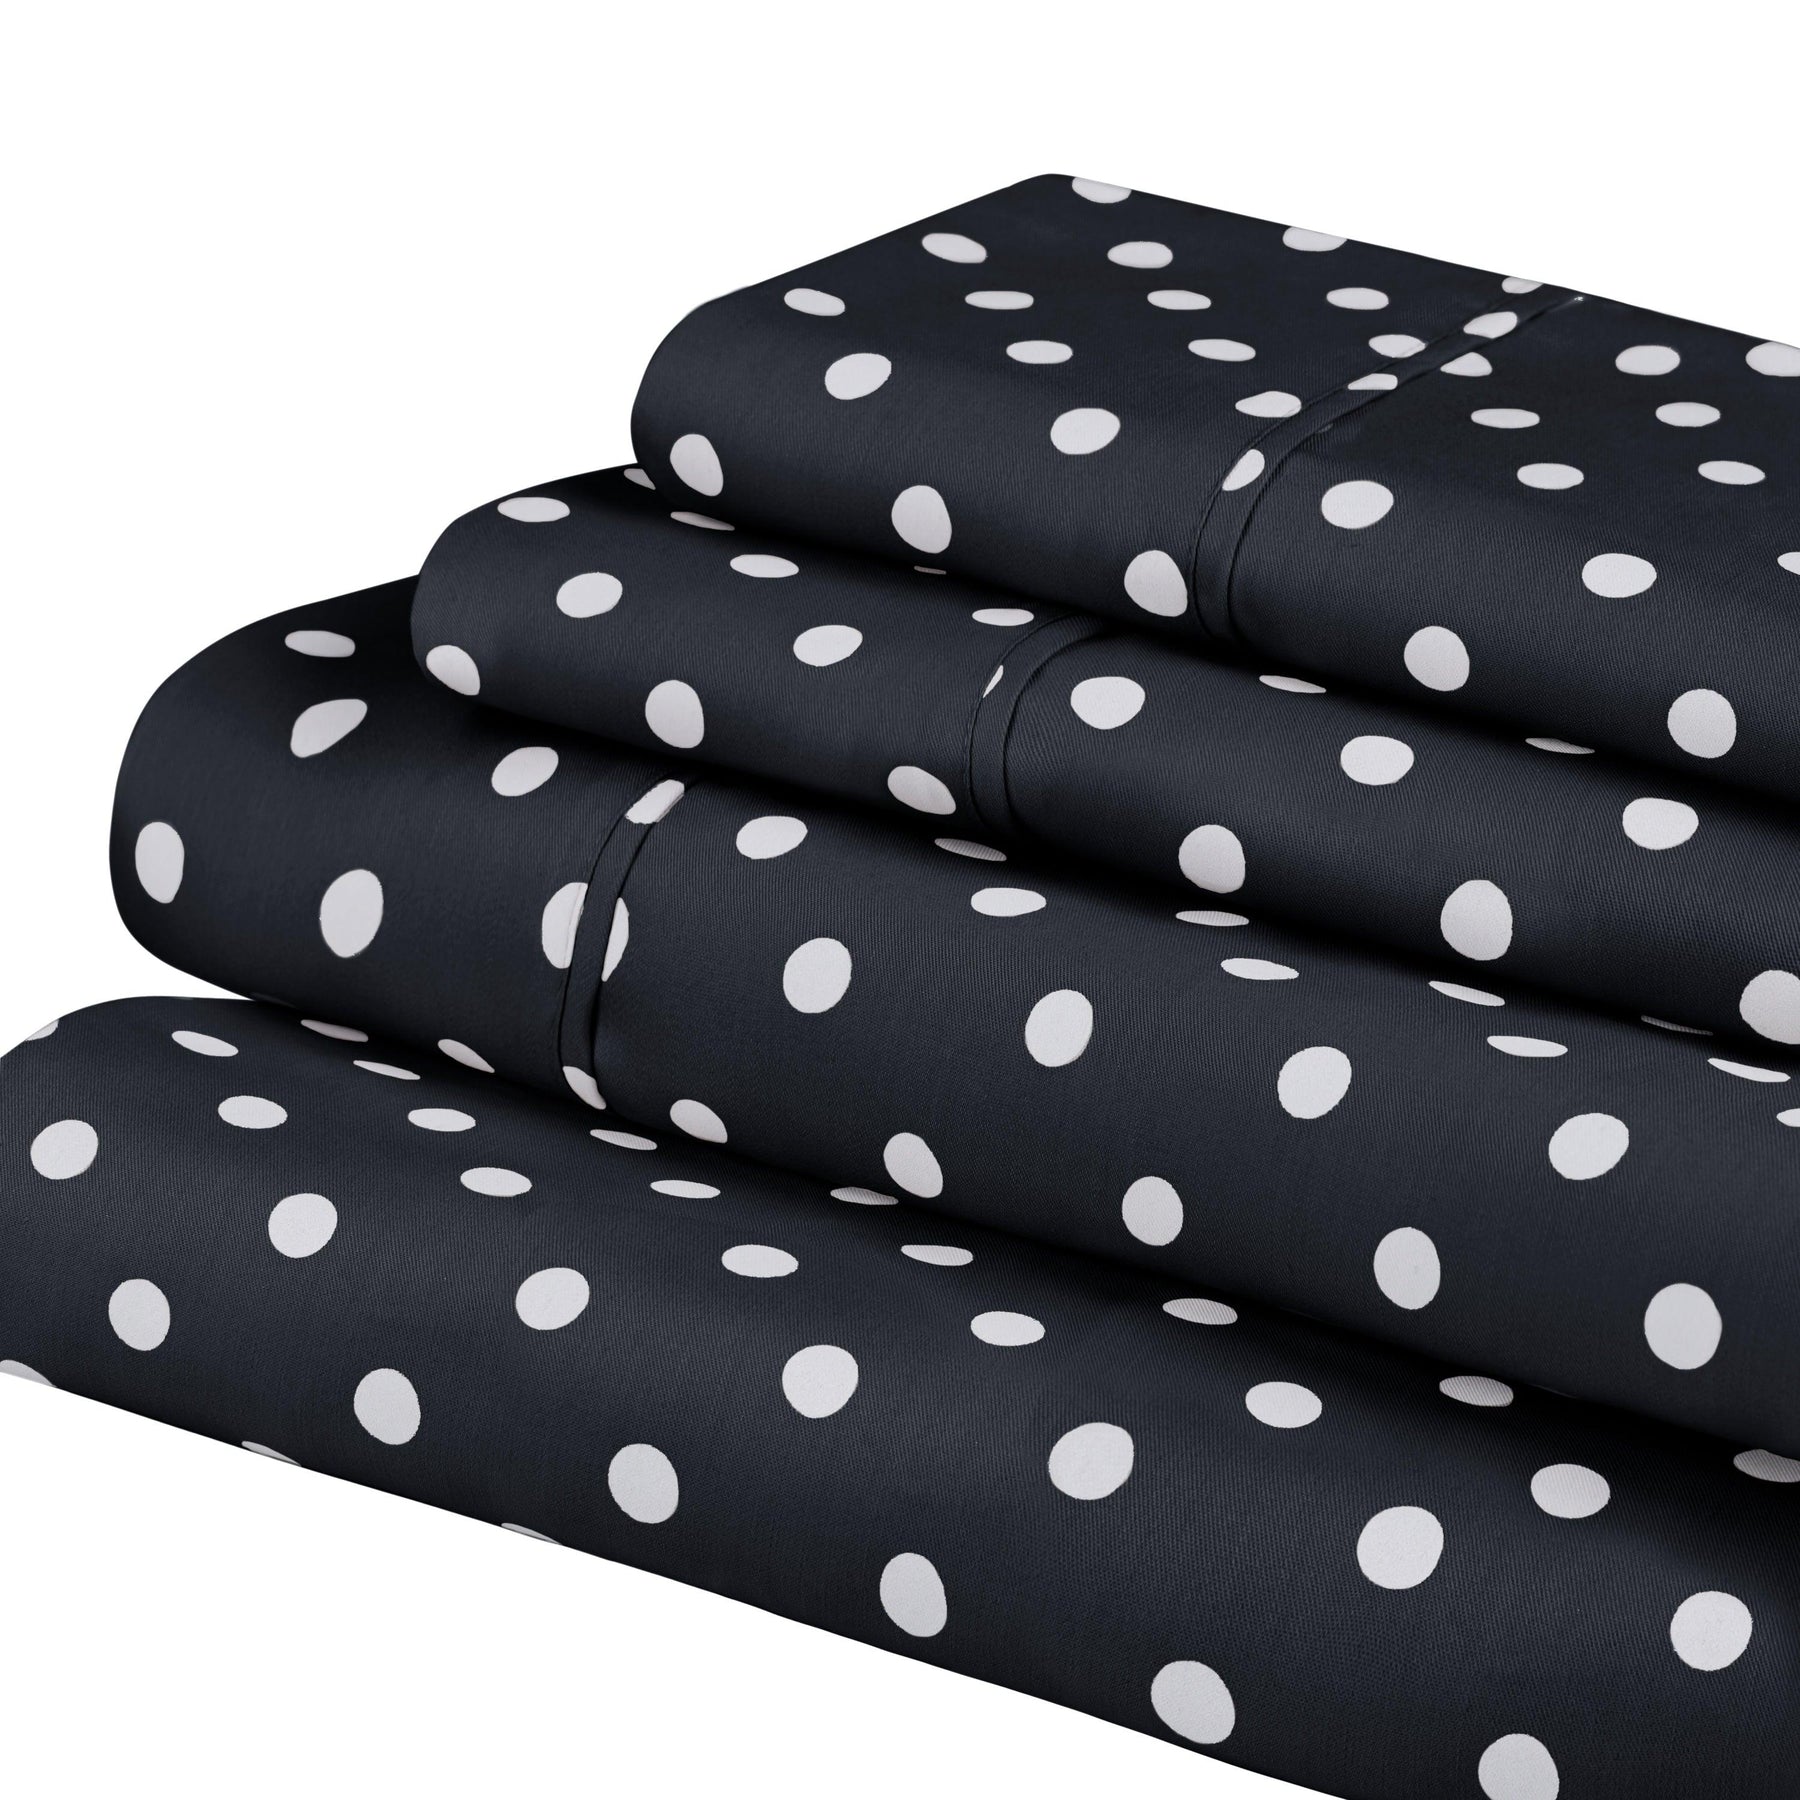 Superior Cotton Blend Polka Dot Luxury Deep Pocket Retro Bed Sheet Set - Black 